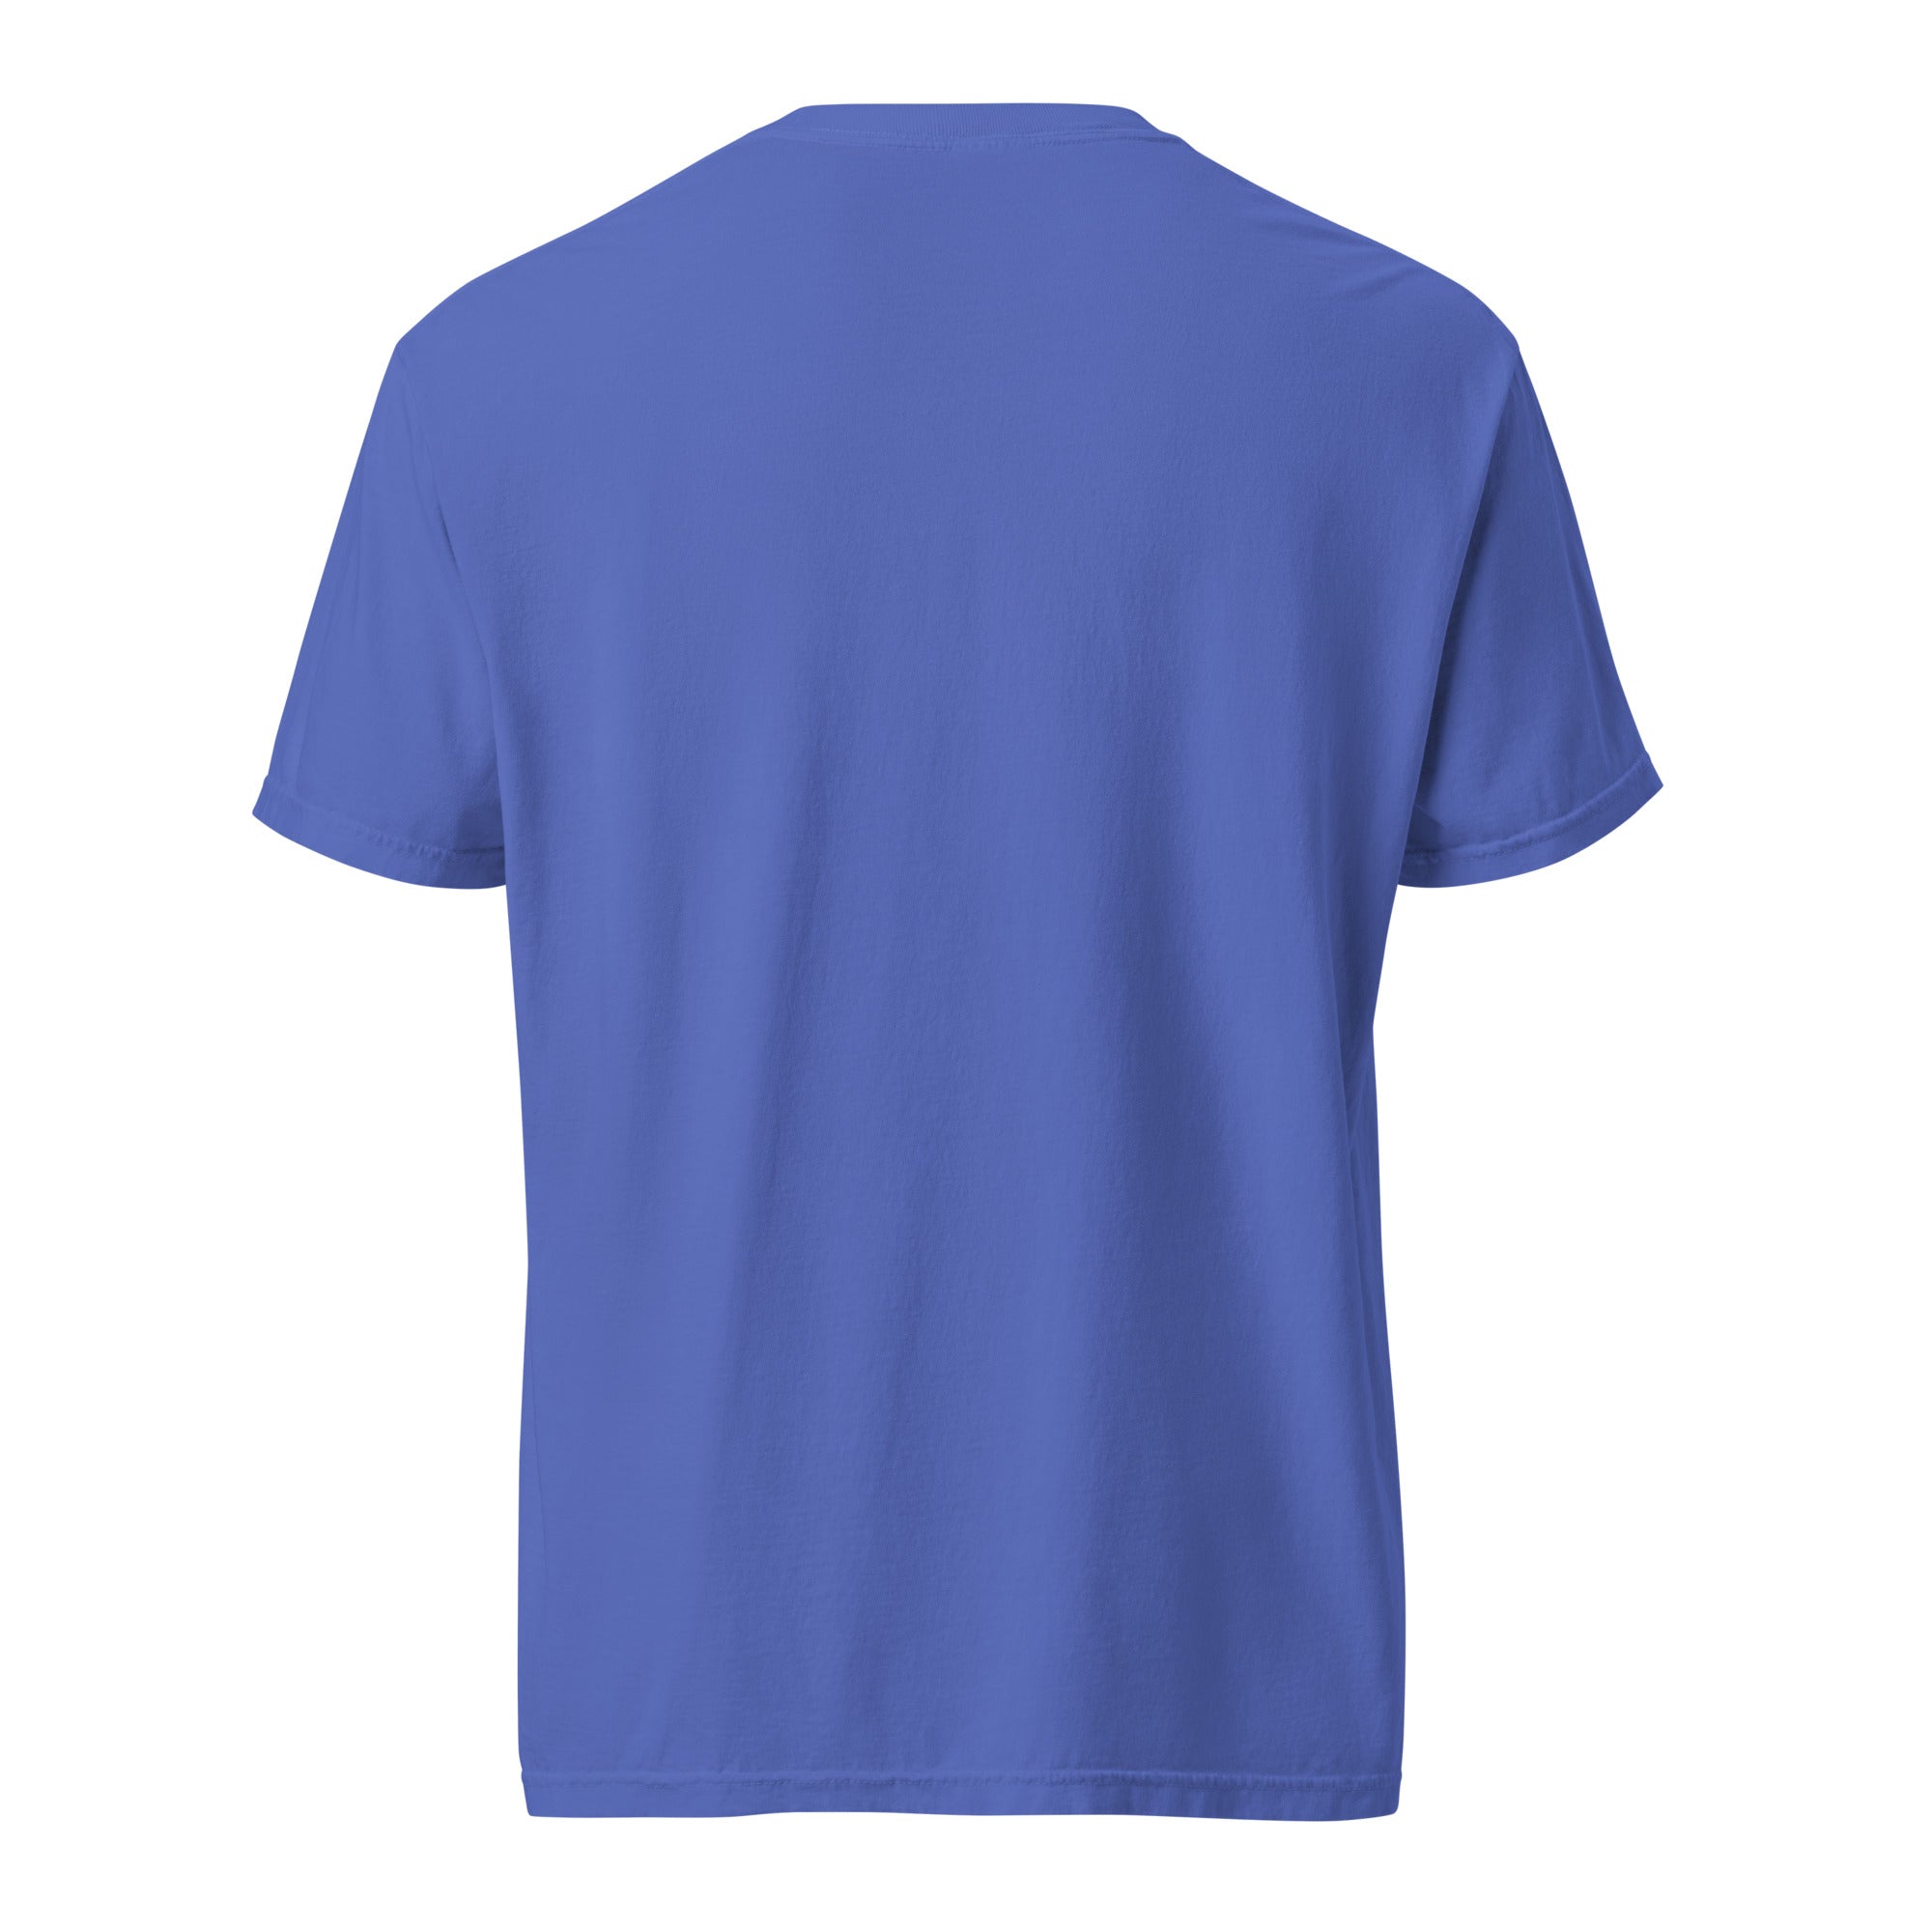 Rugby Imports UPitt RFC Garment Dyed T-Shirt